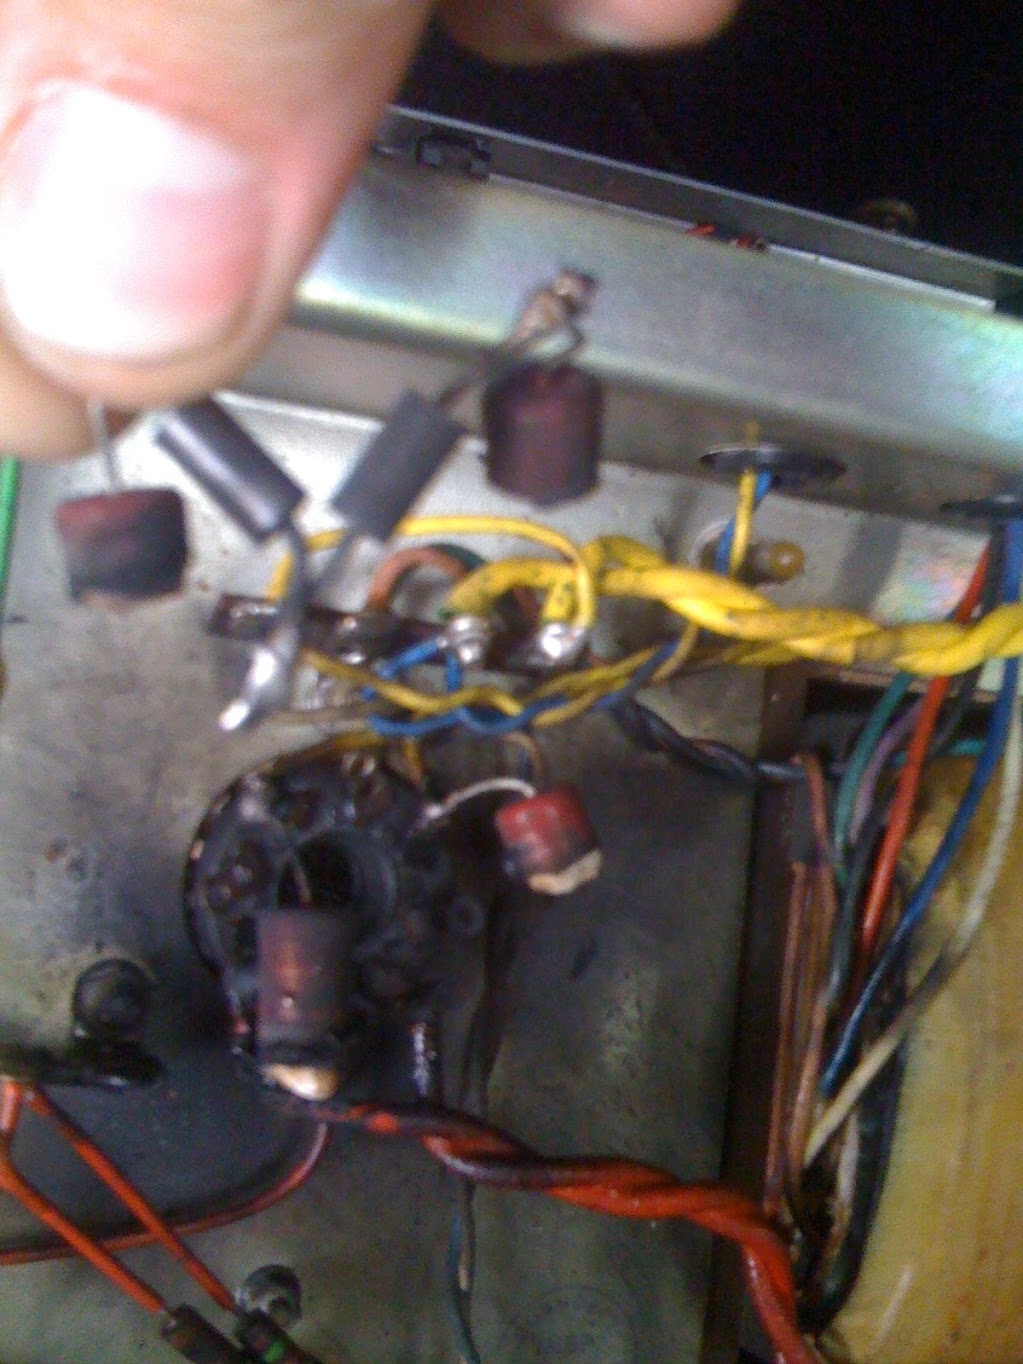 burnt resistor as result of poor servicing